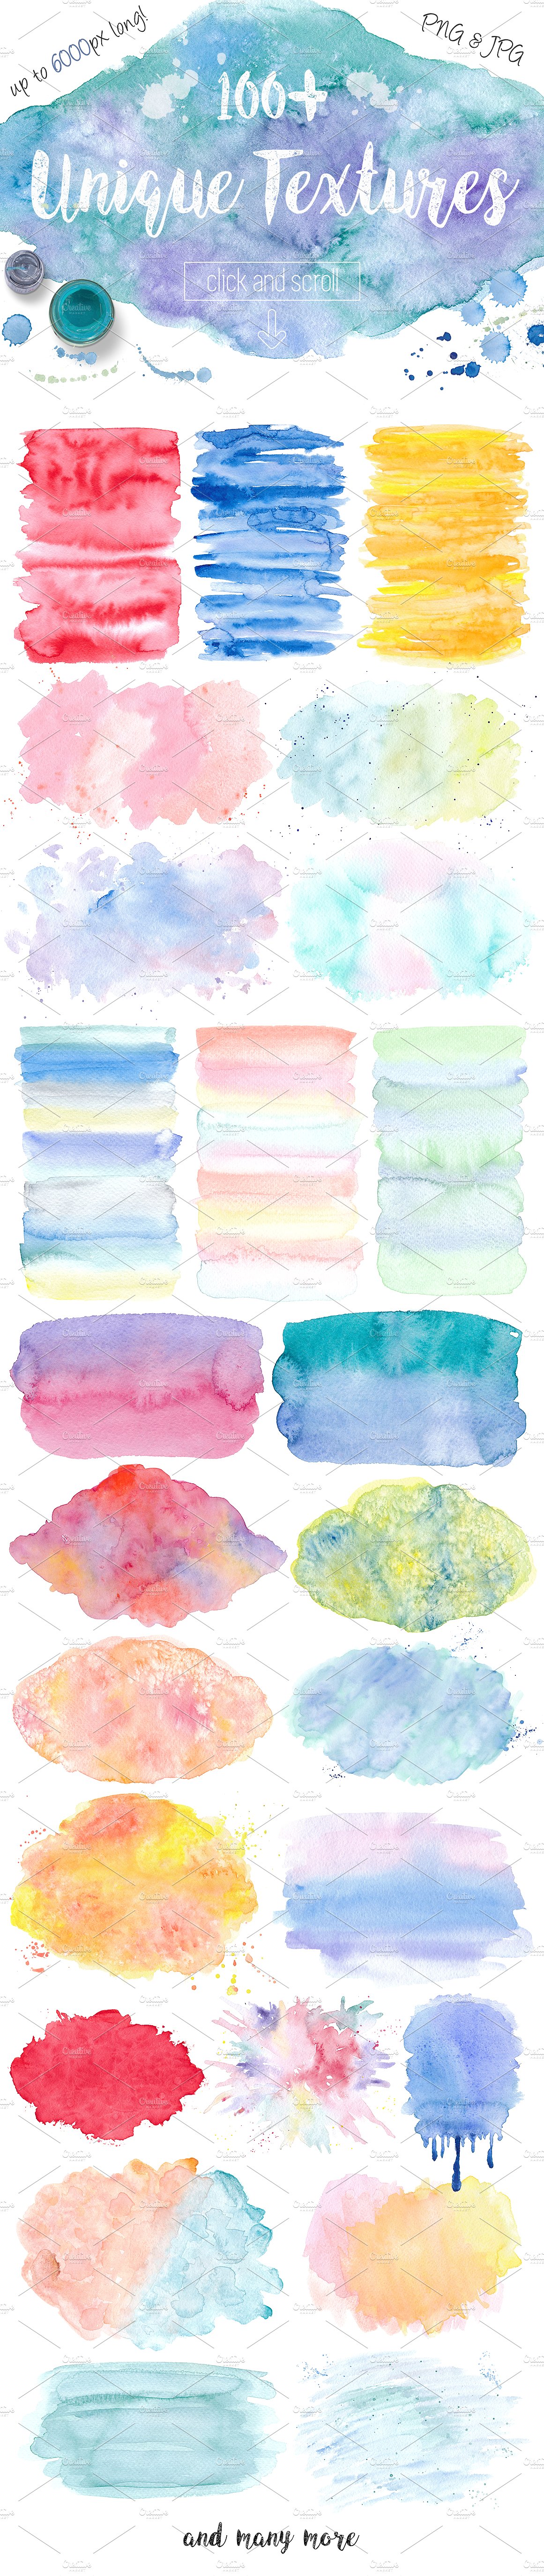 明亮的手绘水彩纹理包 Bright Watercolor Textures Pack插图6